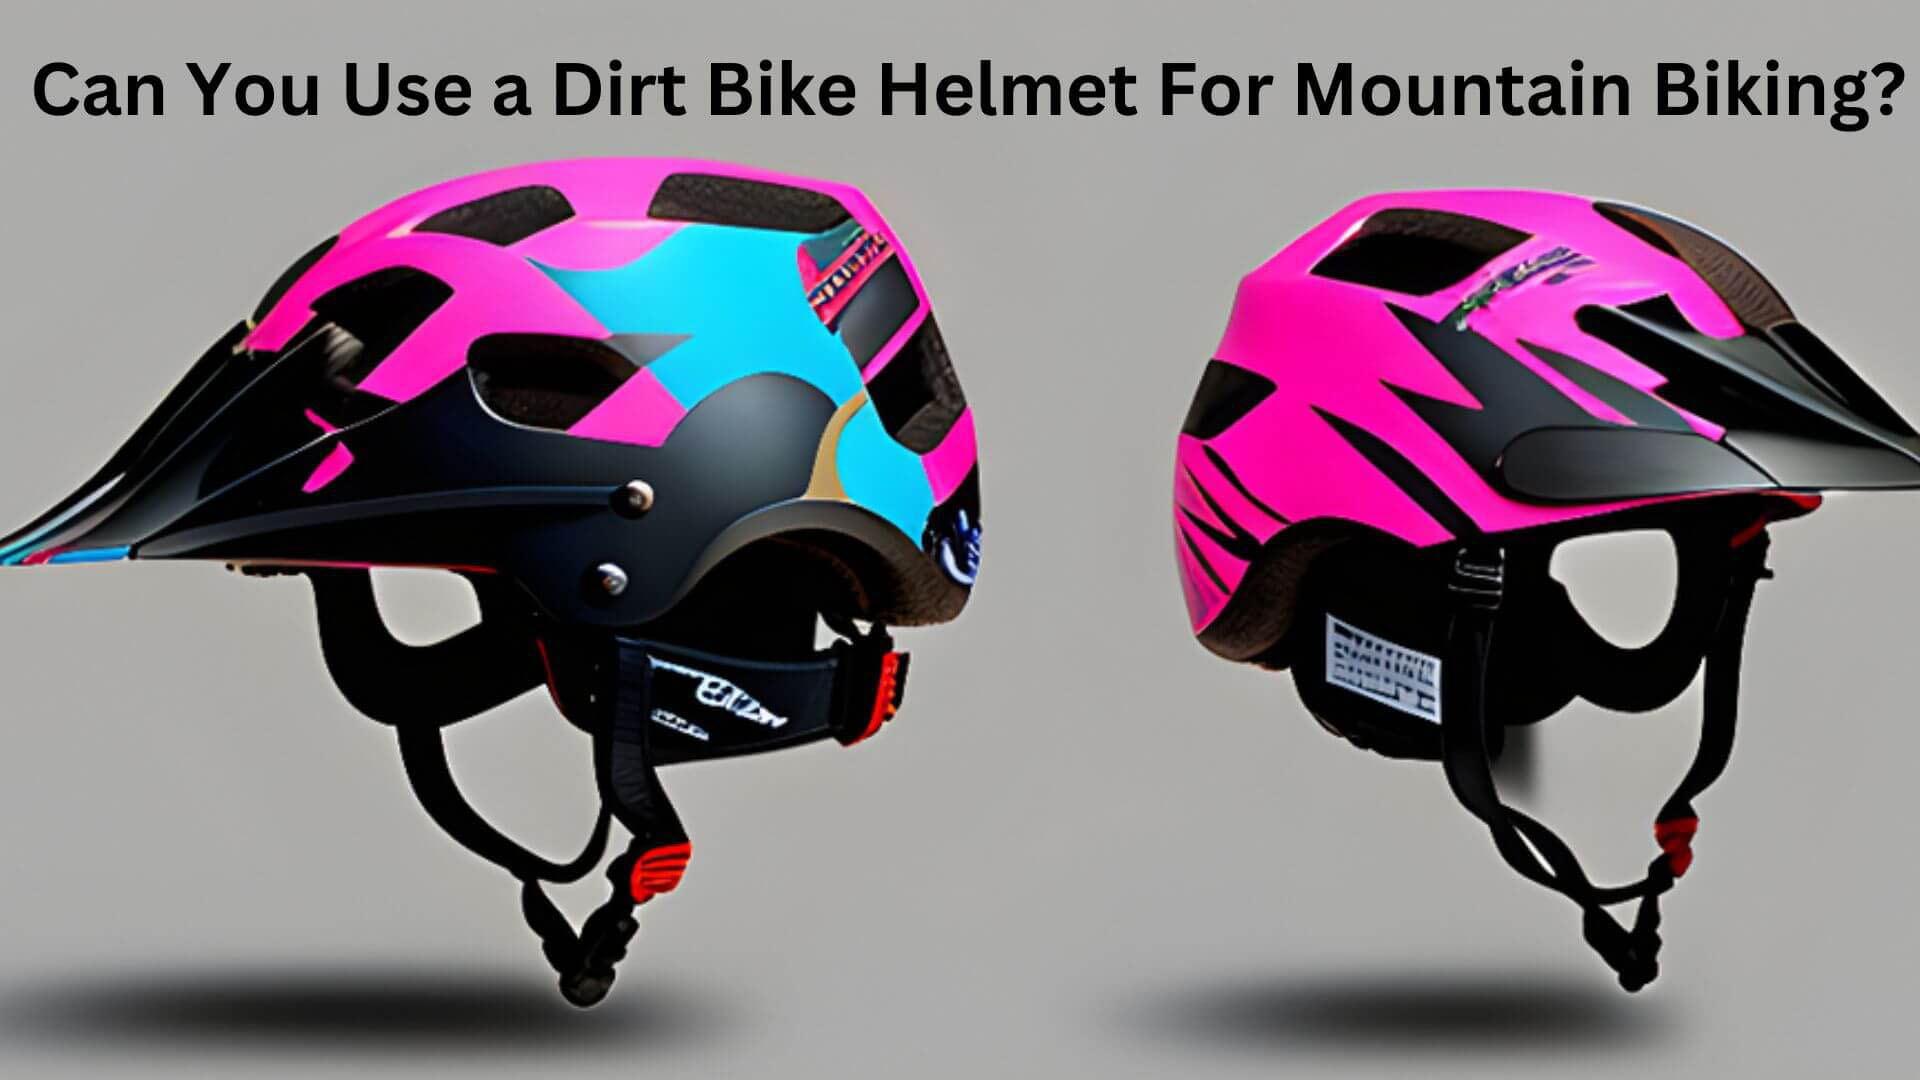 Can You Use a Dirt Bike Helmet for Mountain Biking?